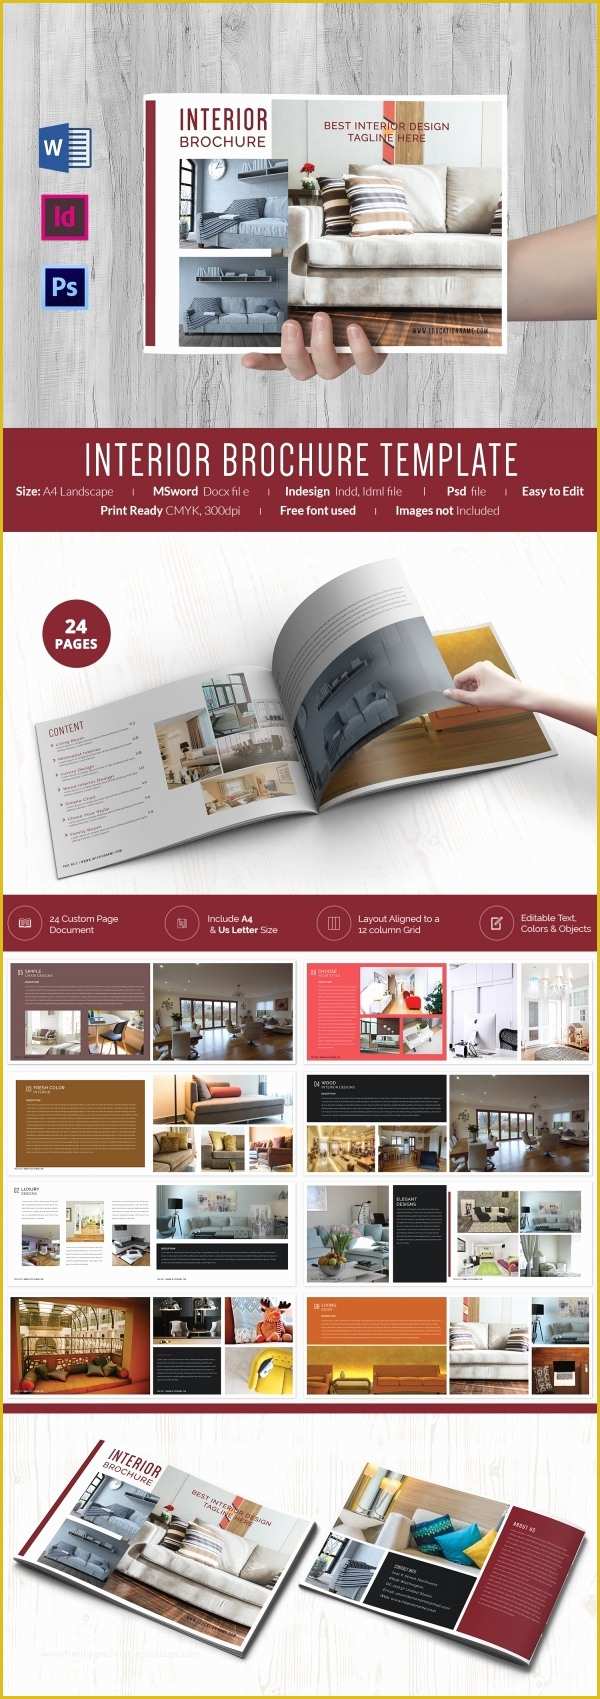 Interior Design Brochure Template Free Of Interior Design Brochure 25 Free Psd Eps Indesign